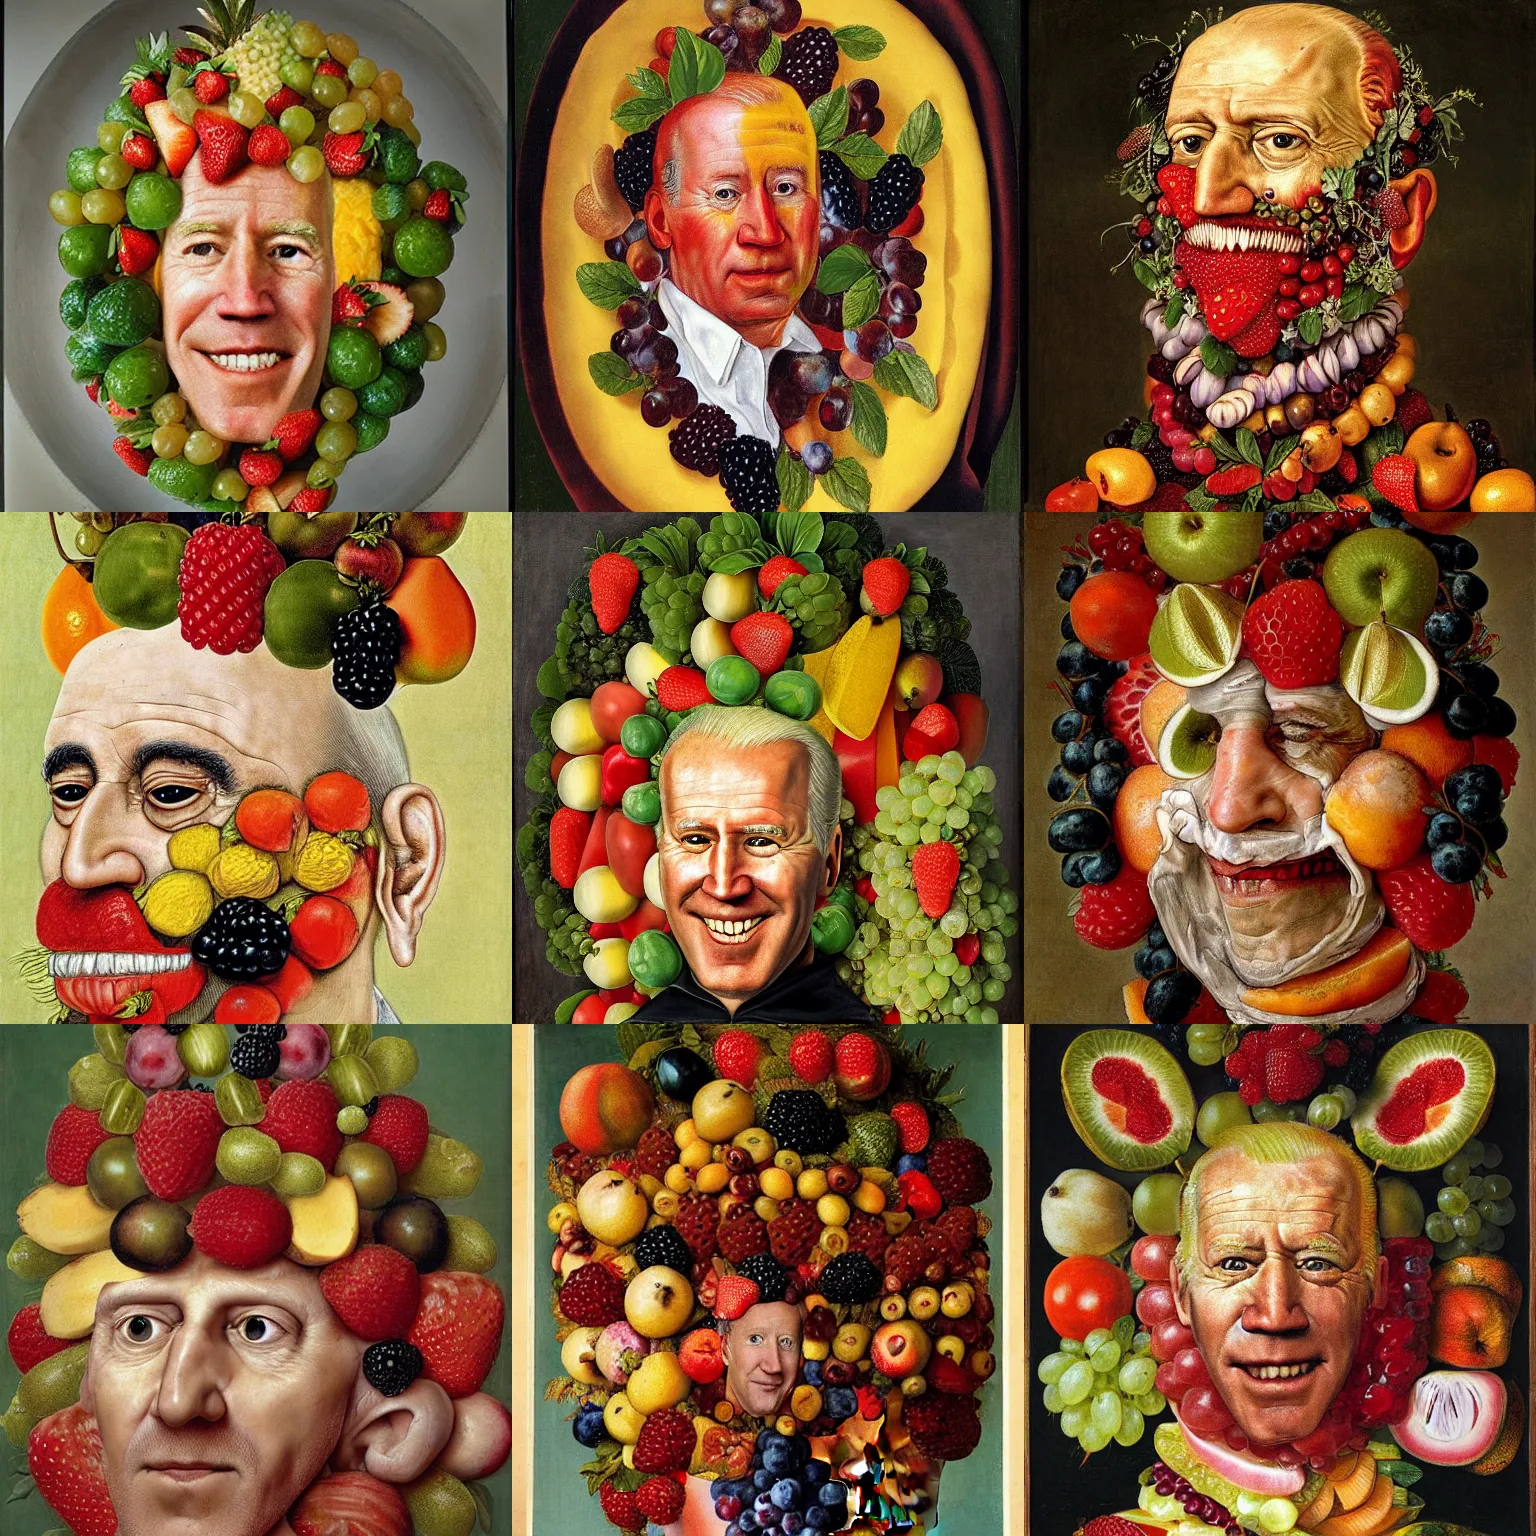 Prompt: a fruit salad with the face of joe biden, by giuseppe arcimboldo